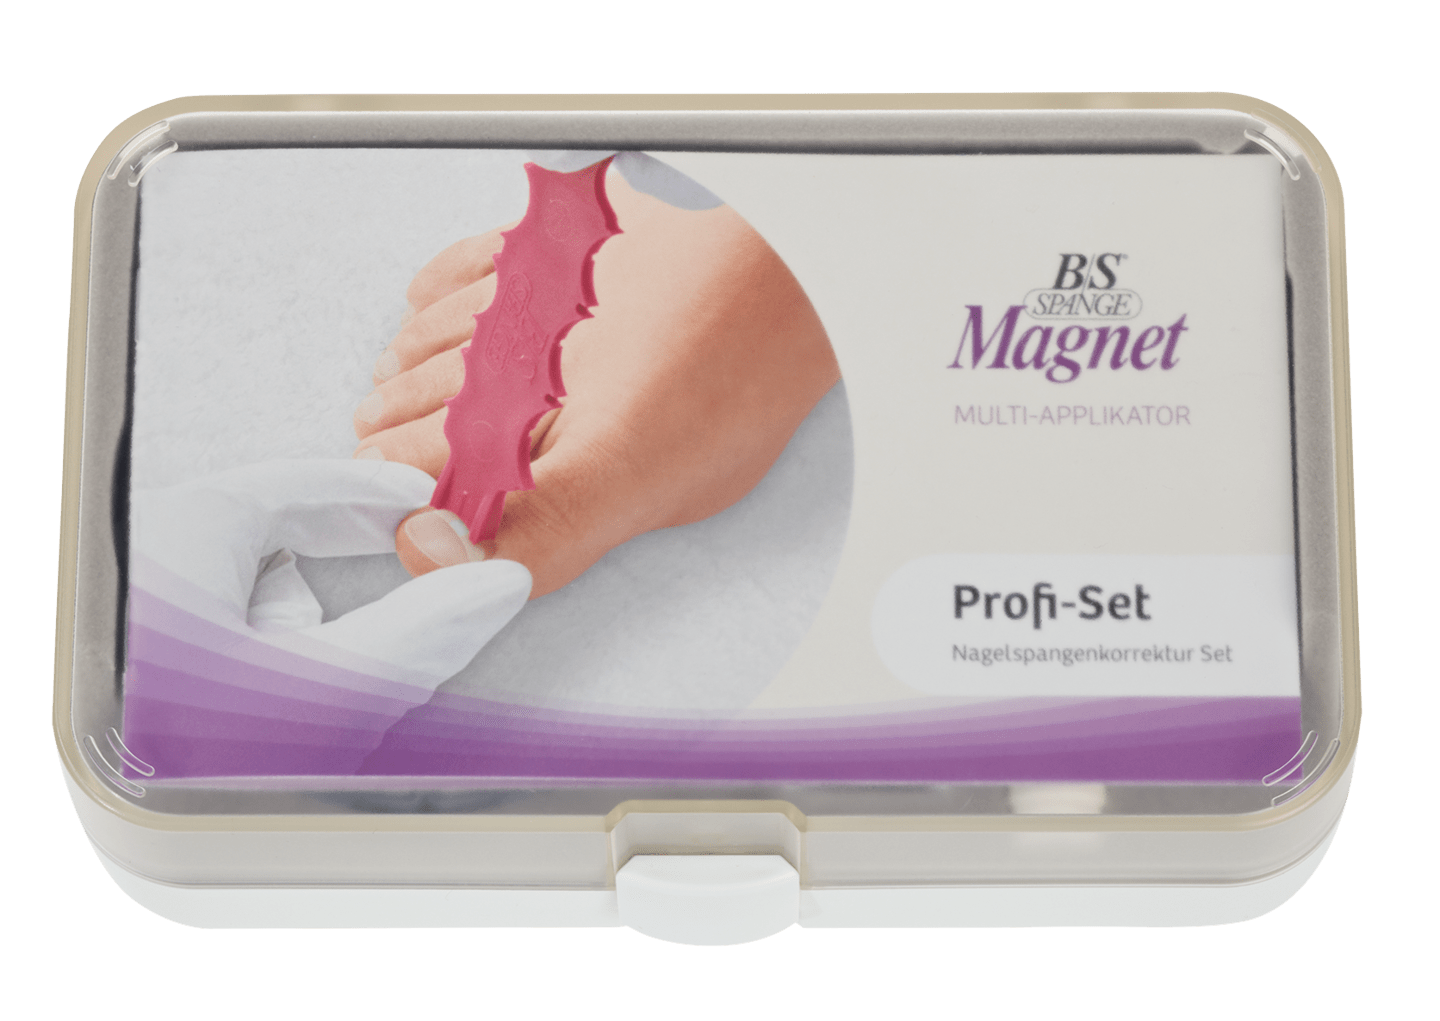 B/S - Magnet Profi-Set mit Multi-Applikator